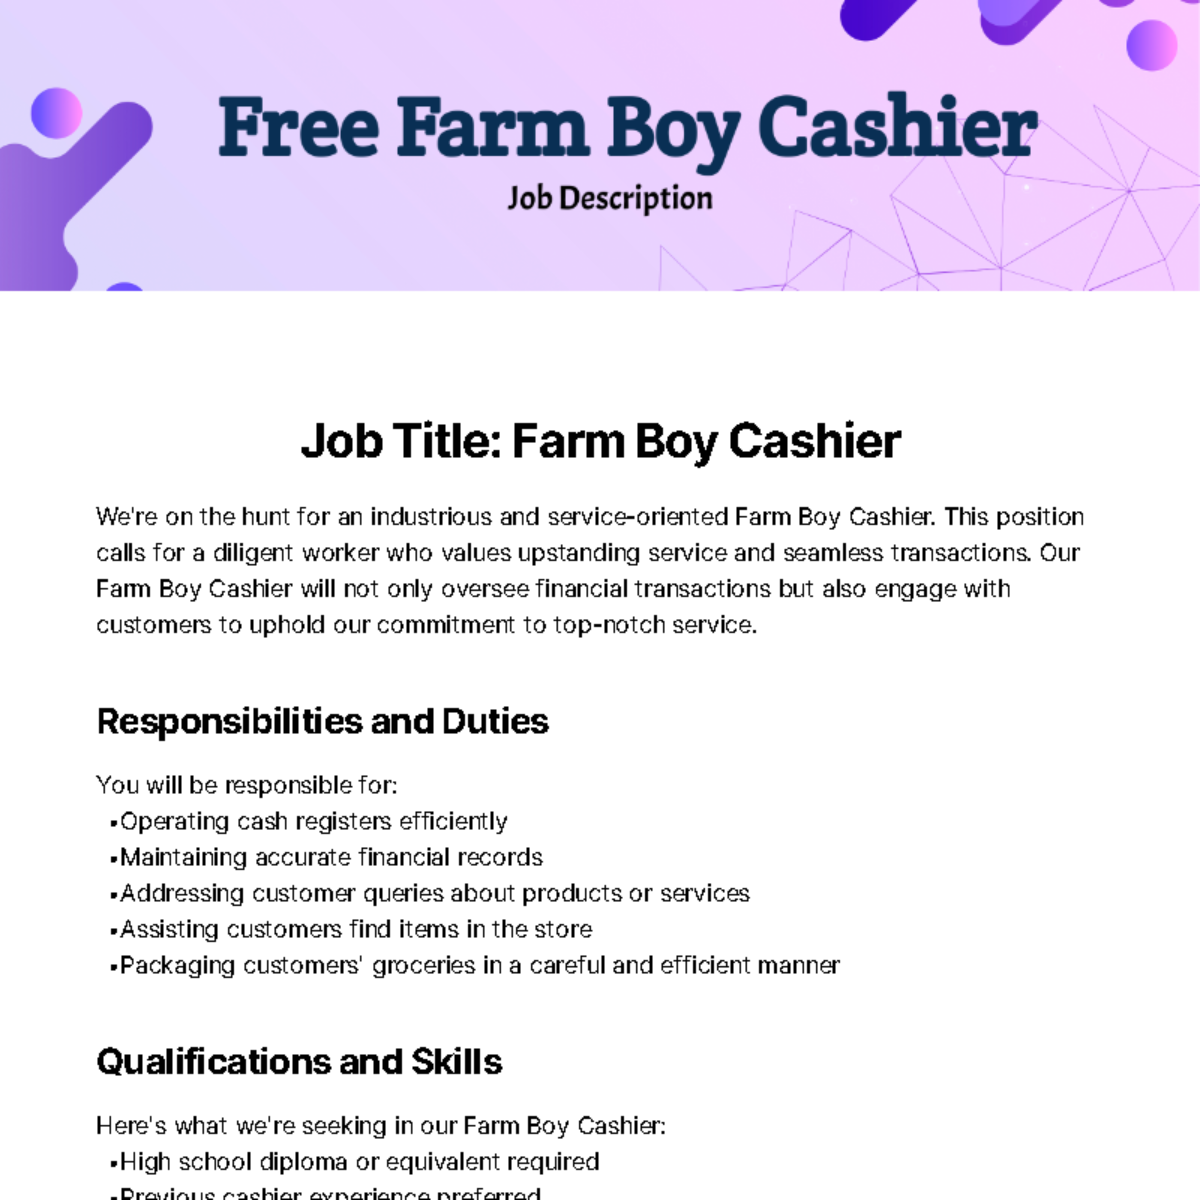 Free Farm Boy Cashier Job Description Template